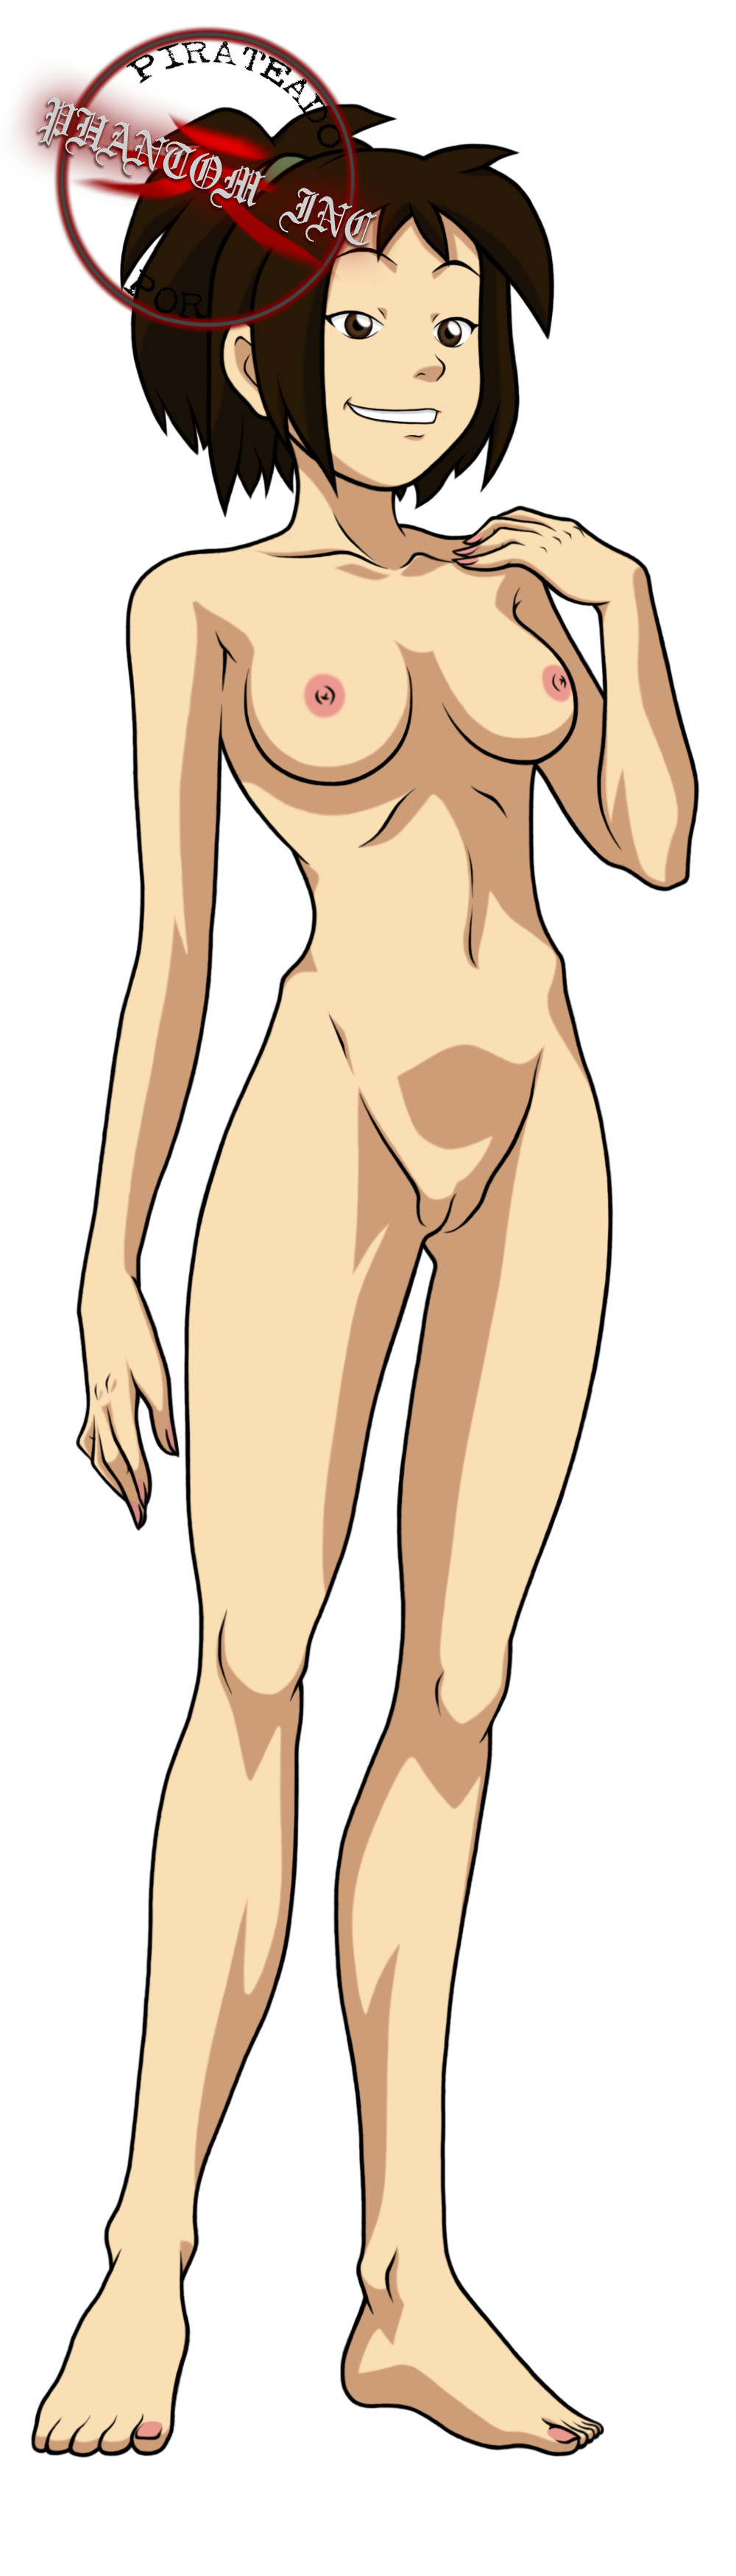 busty teen aus avatar Cartoon sieht sehr sexy